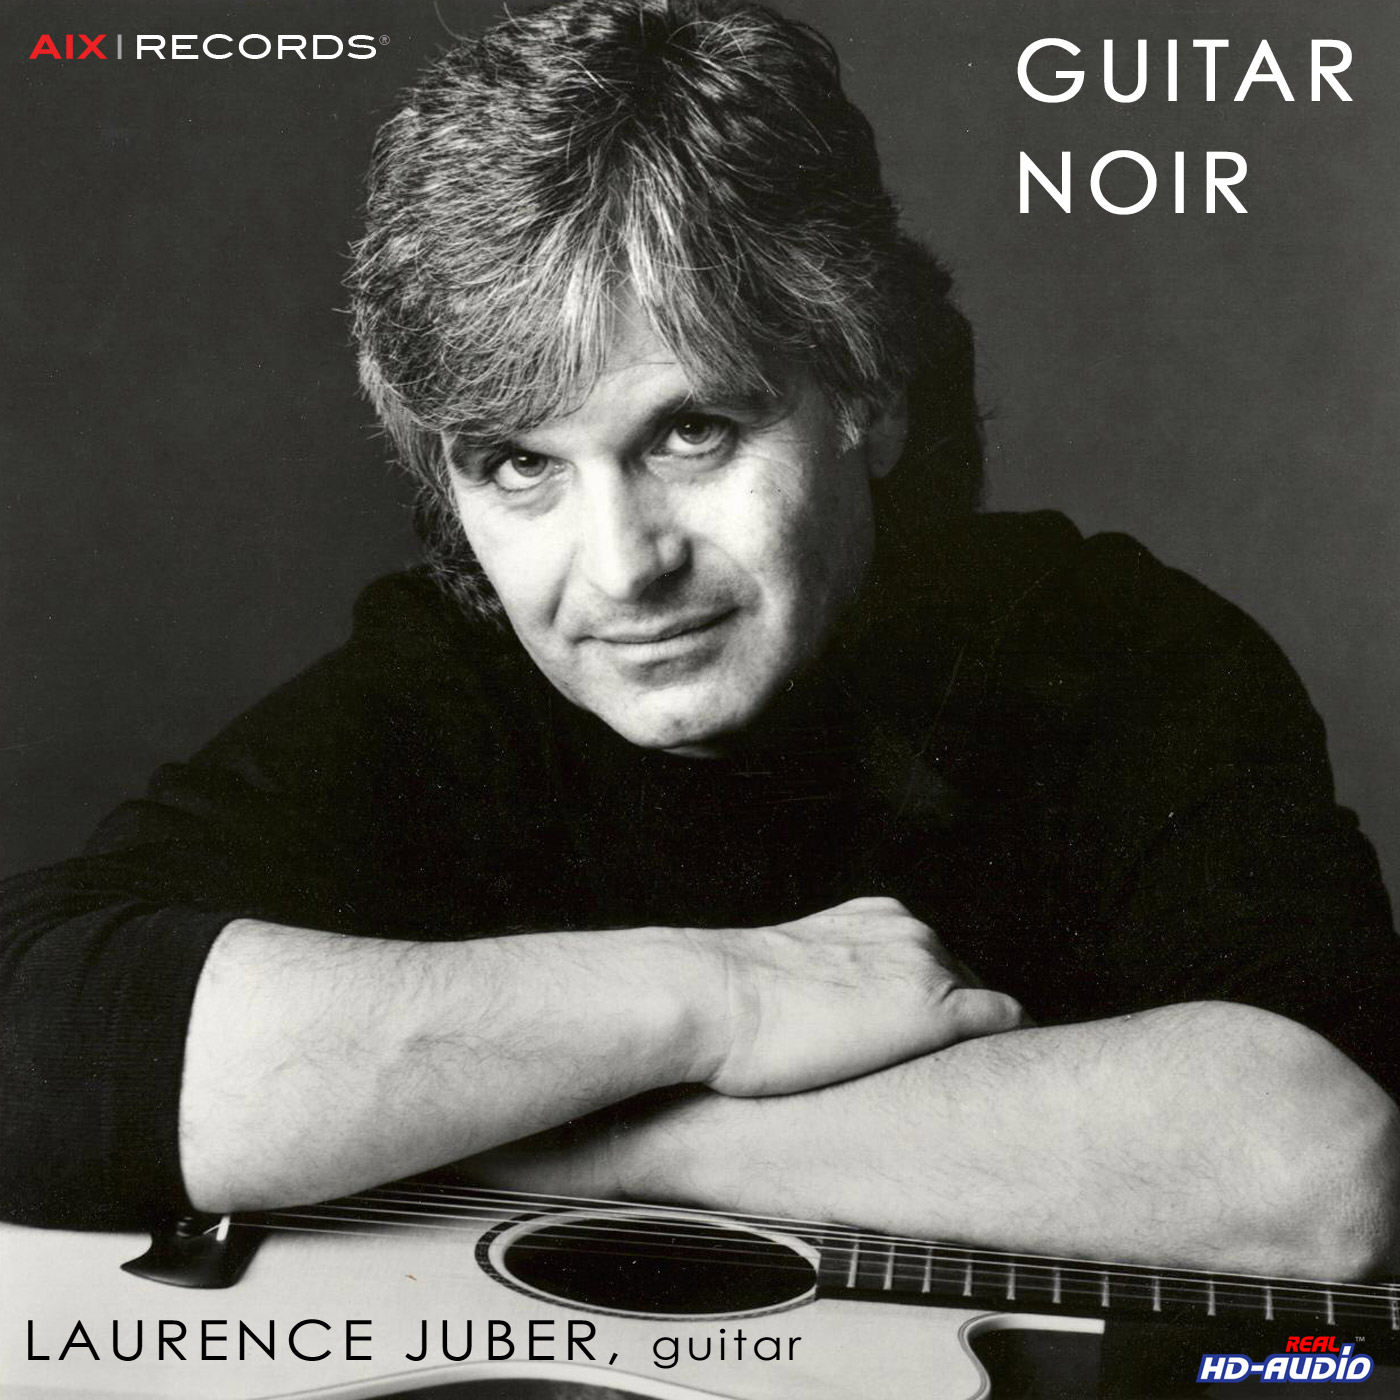 laurence_juber_guitar_noir_cover.jpg